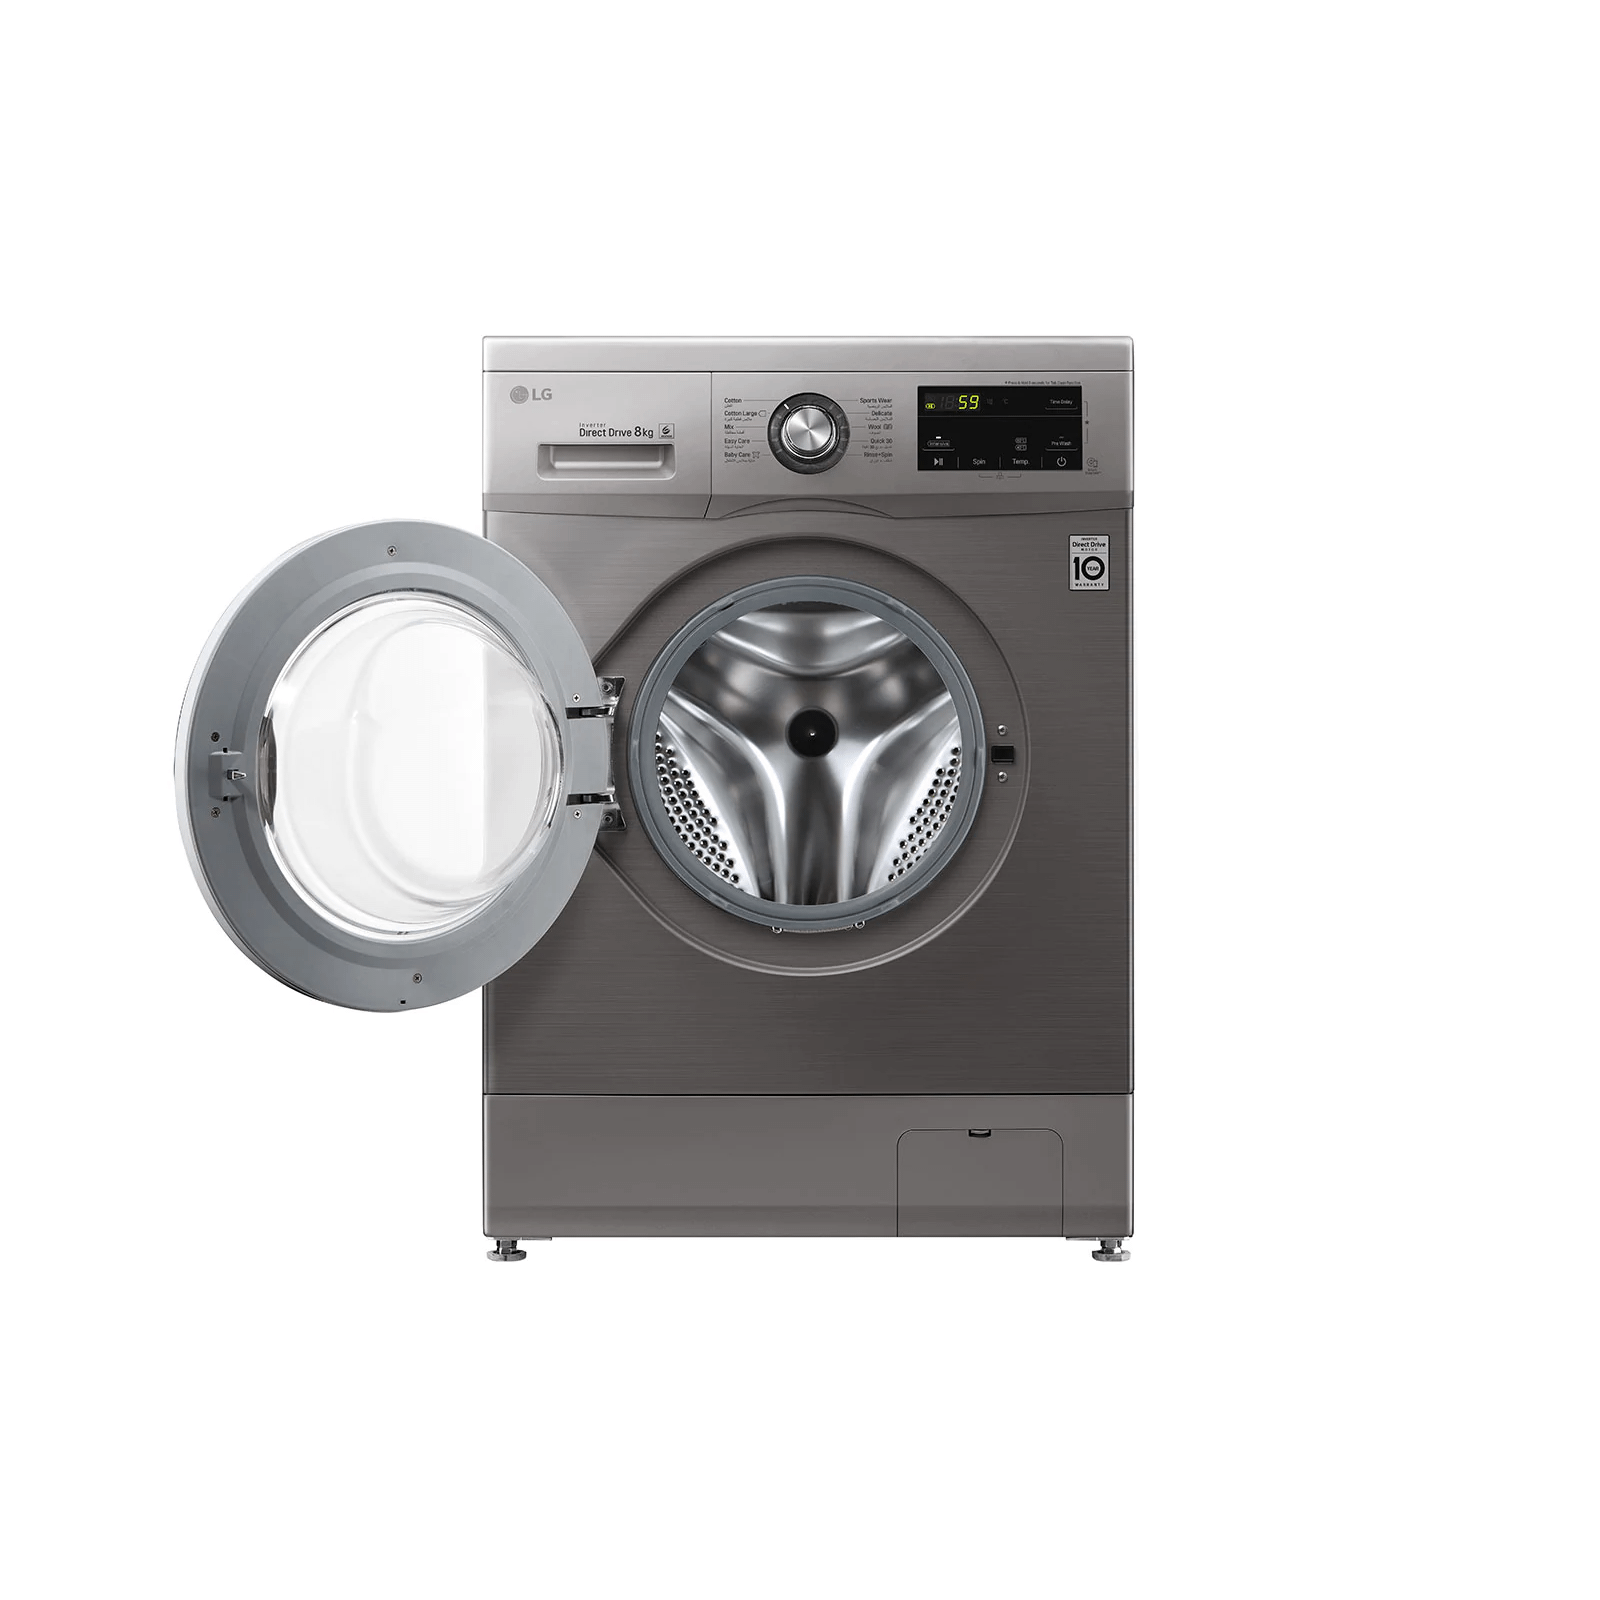 LG Automatic Washing Machine, 8 Kg, Inverter Motor, Silver -